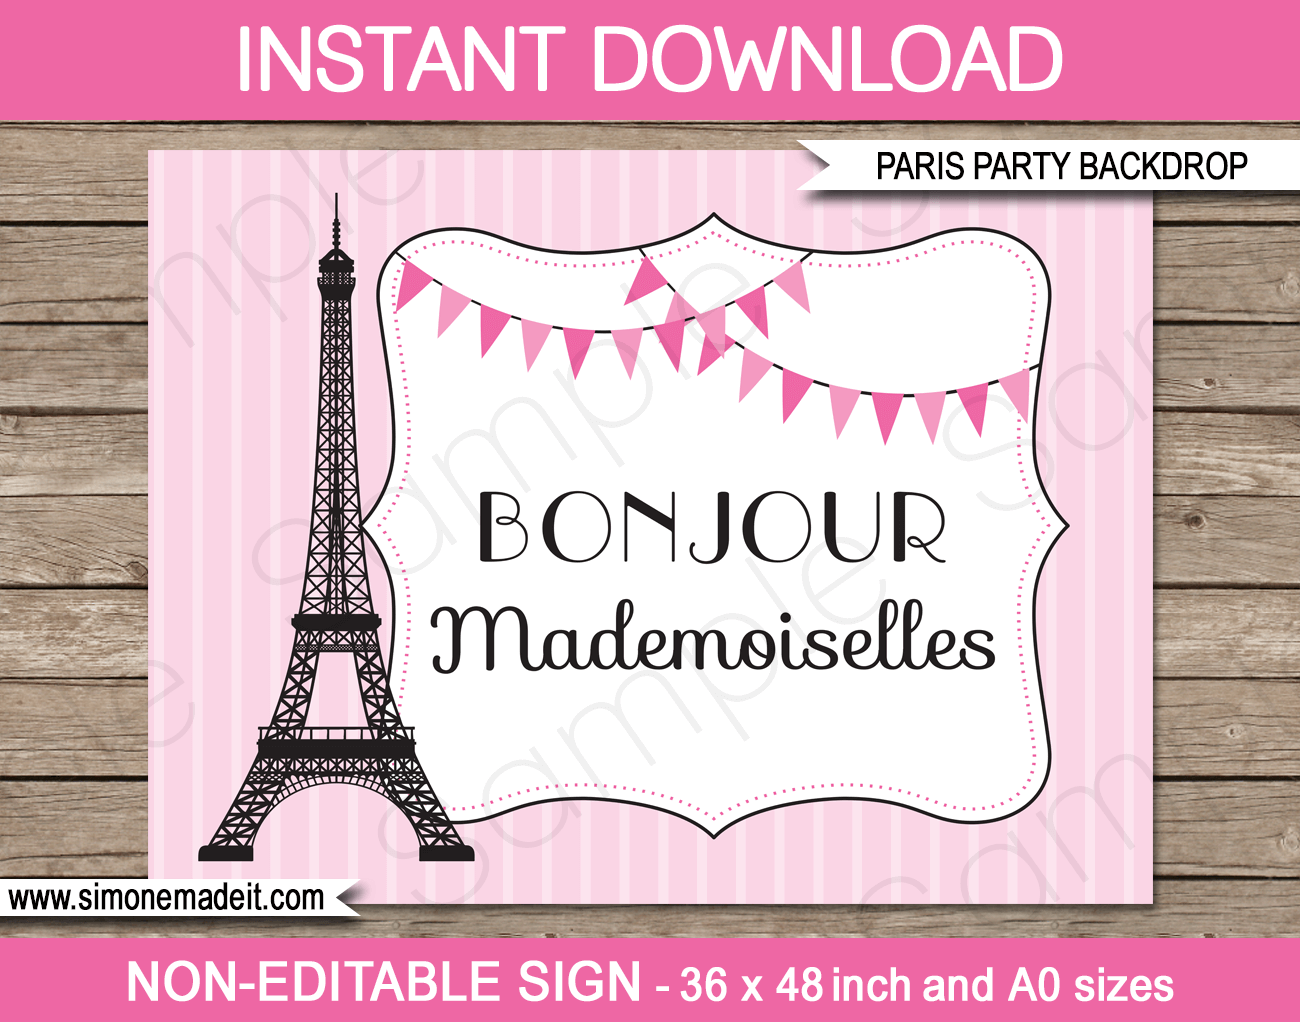 Paris Party Backdrop Sign - Bonjour Mademoiselles | Printable DIY Template | Party Decorations | 36x48 inches | A0 | $4.50 Instant Download via SIMONEmadeit.com